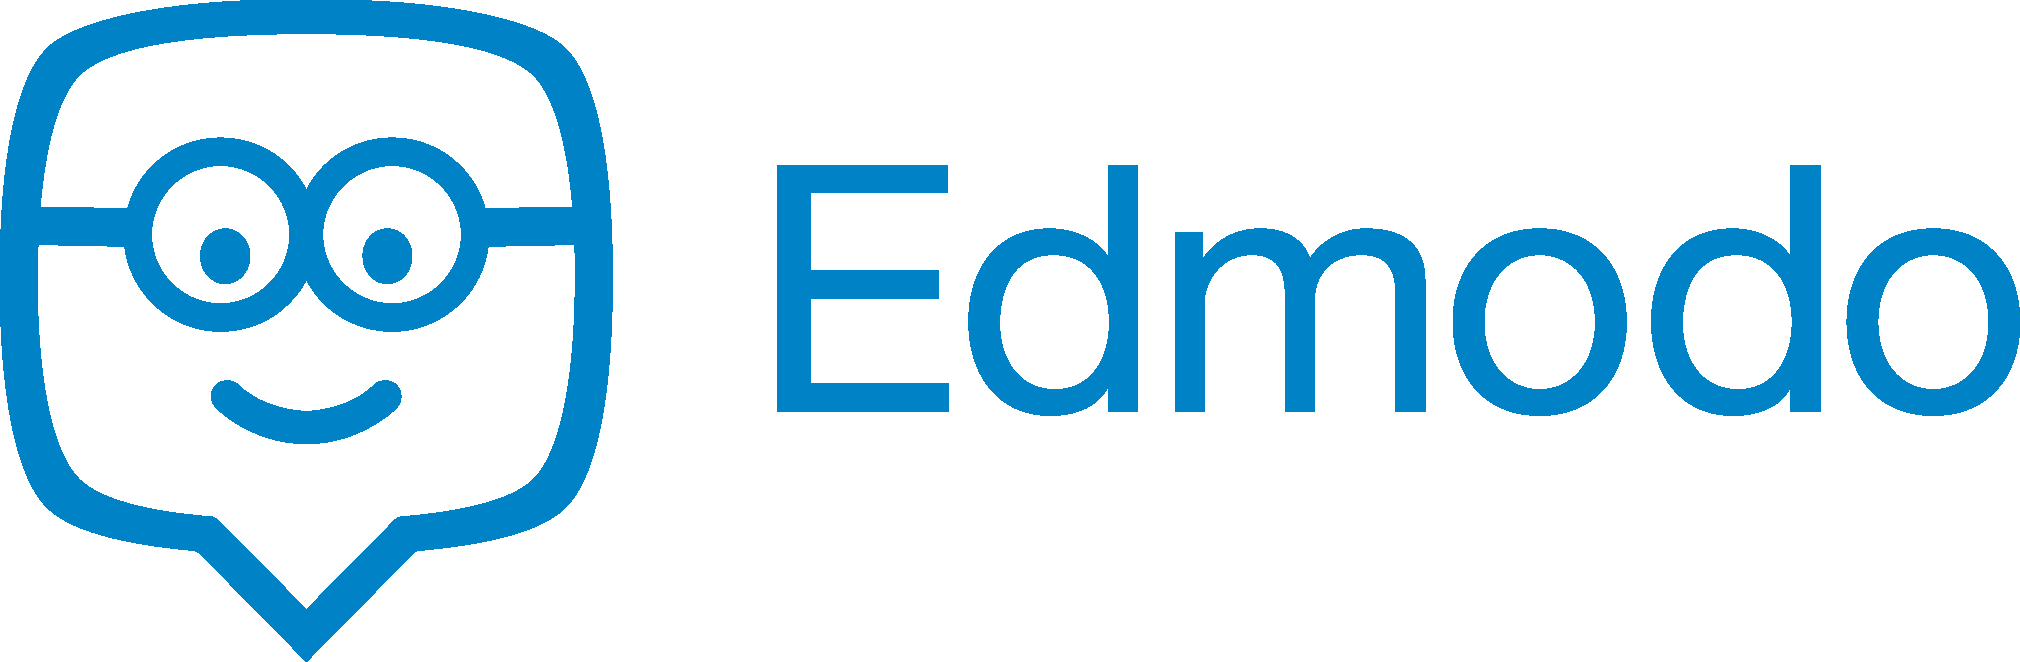 Edmodo Logo - Edmodo Logo Black And White Clipart (2020x662), Png Download